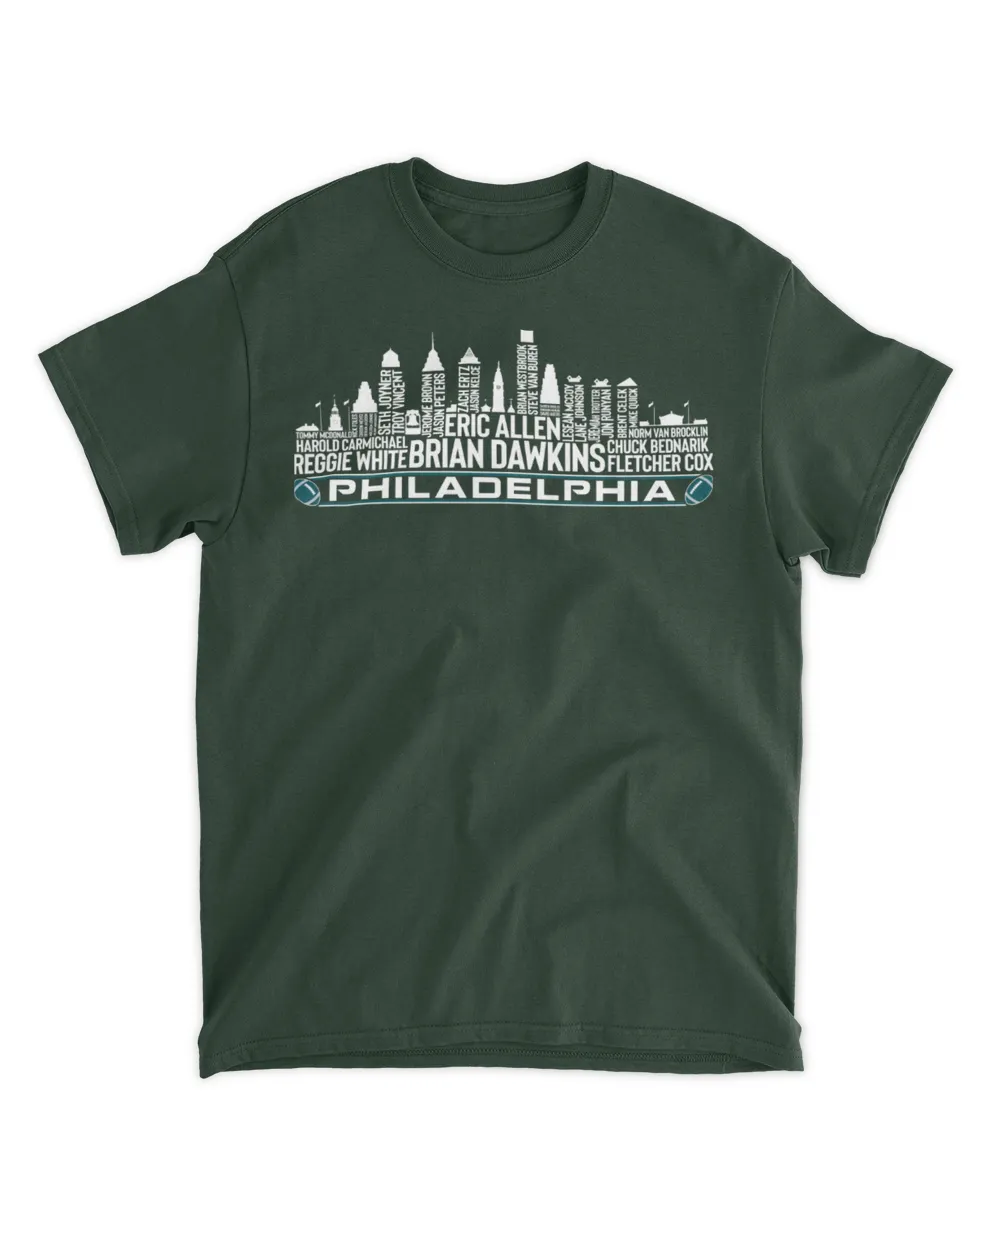 Philadelphia Football Team All Time Legends, Philadelphia City Skyline